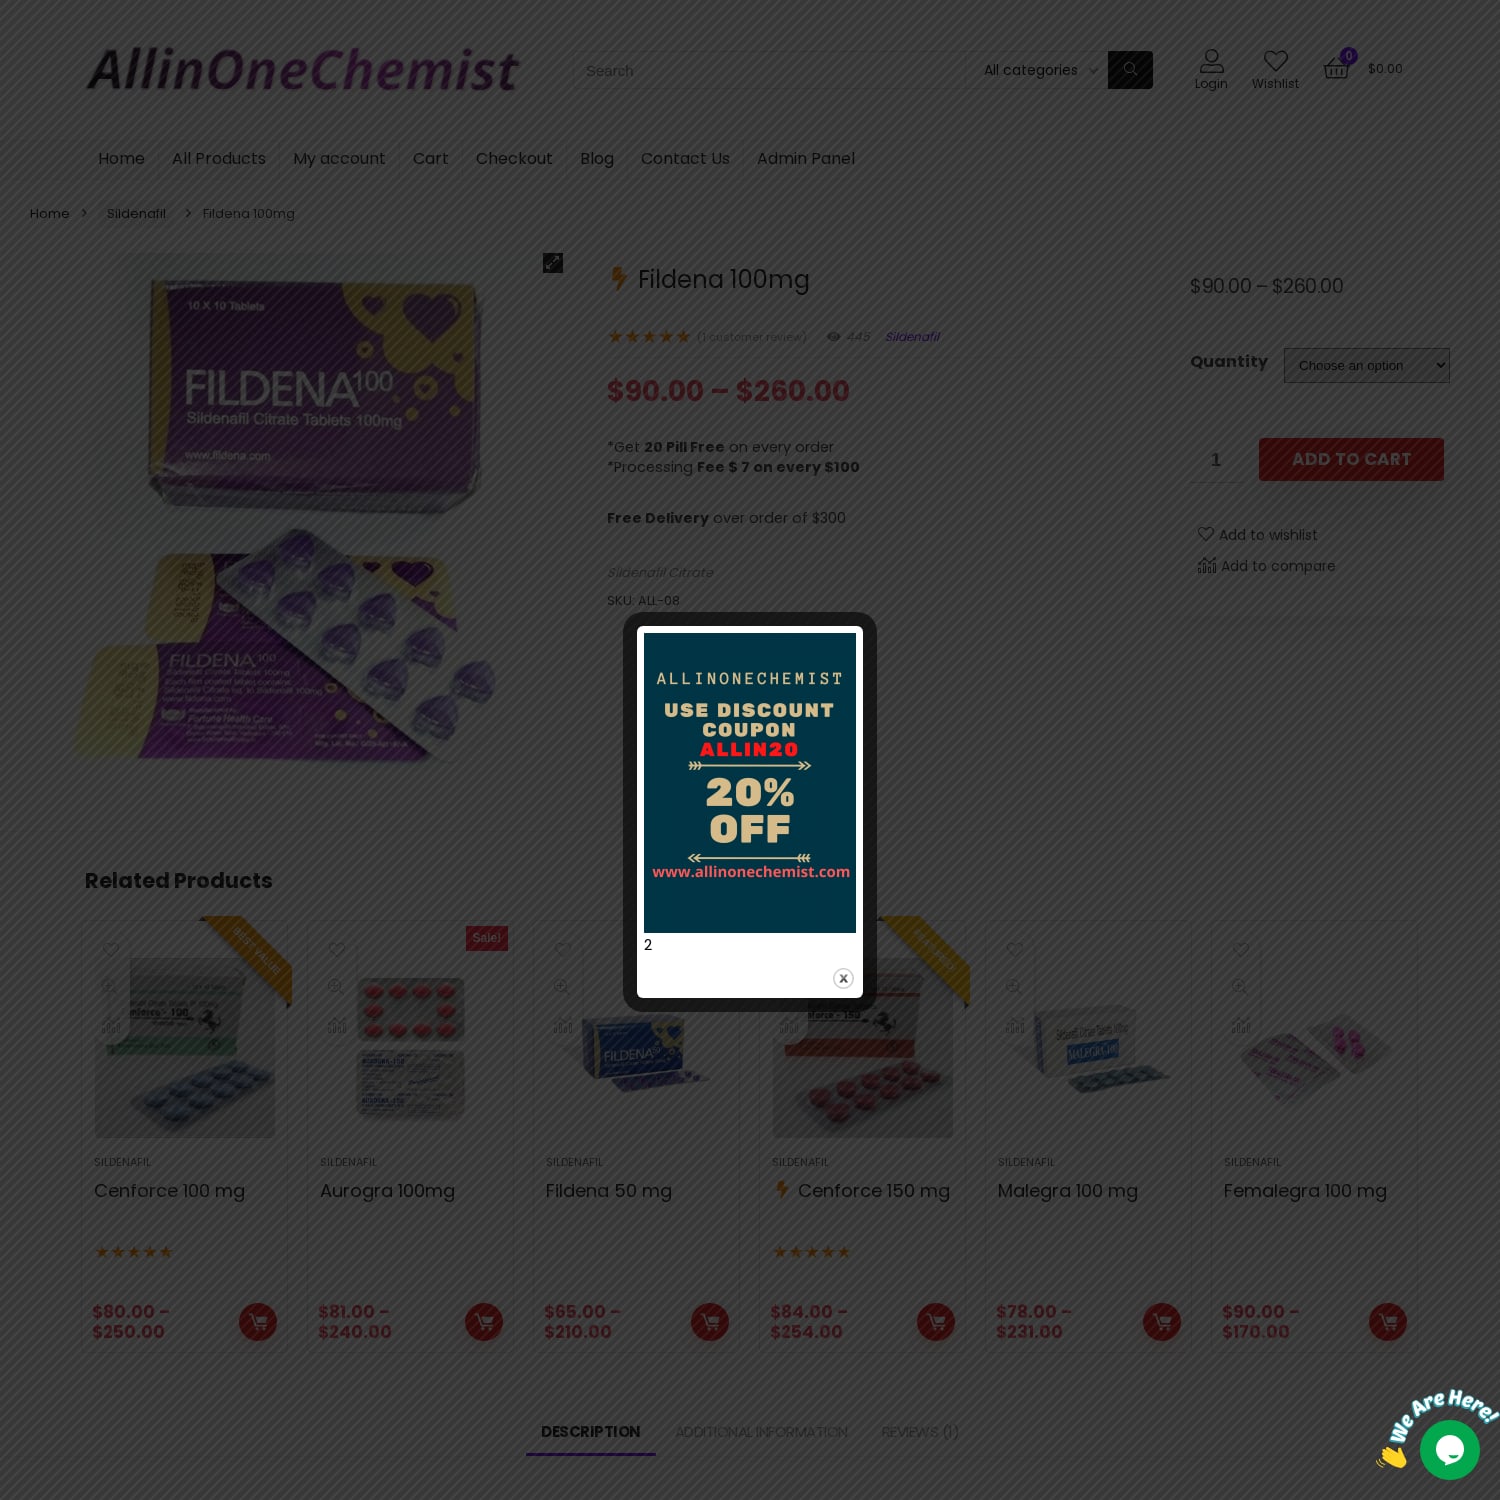 Fildena 100 mg | Buy fildena 100 Purple Triangle Pill